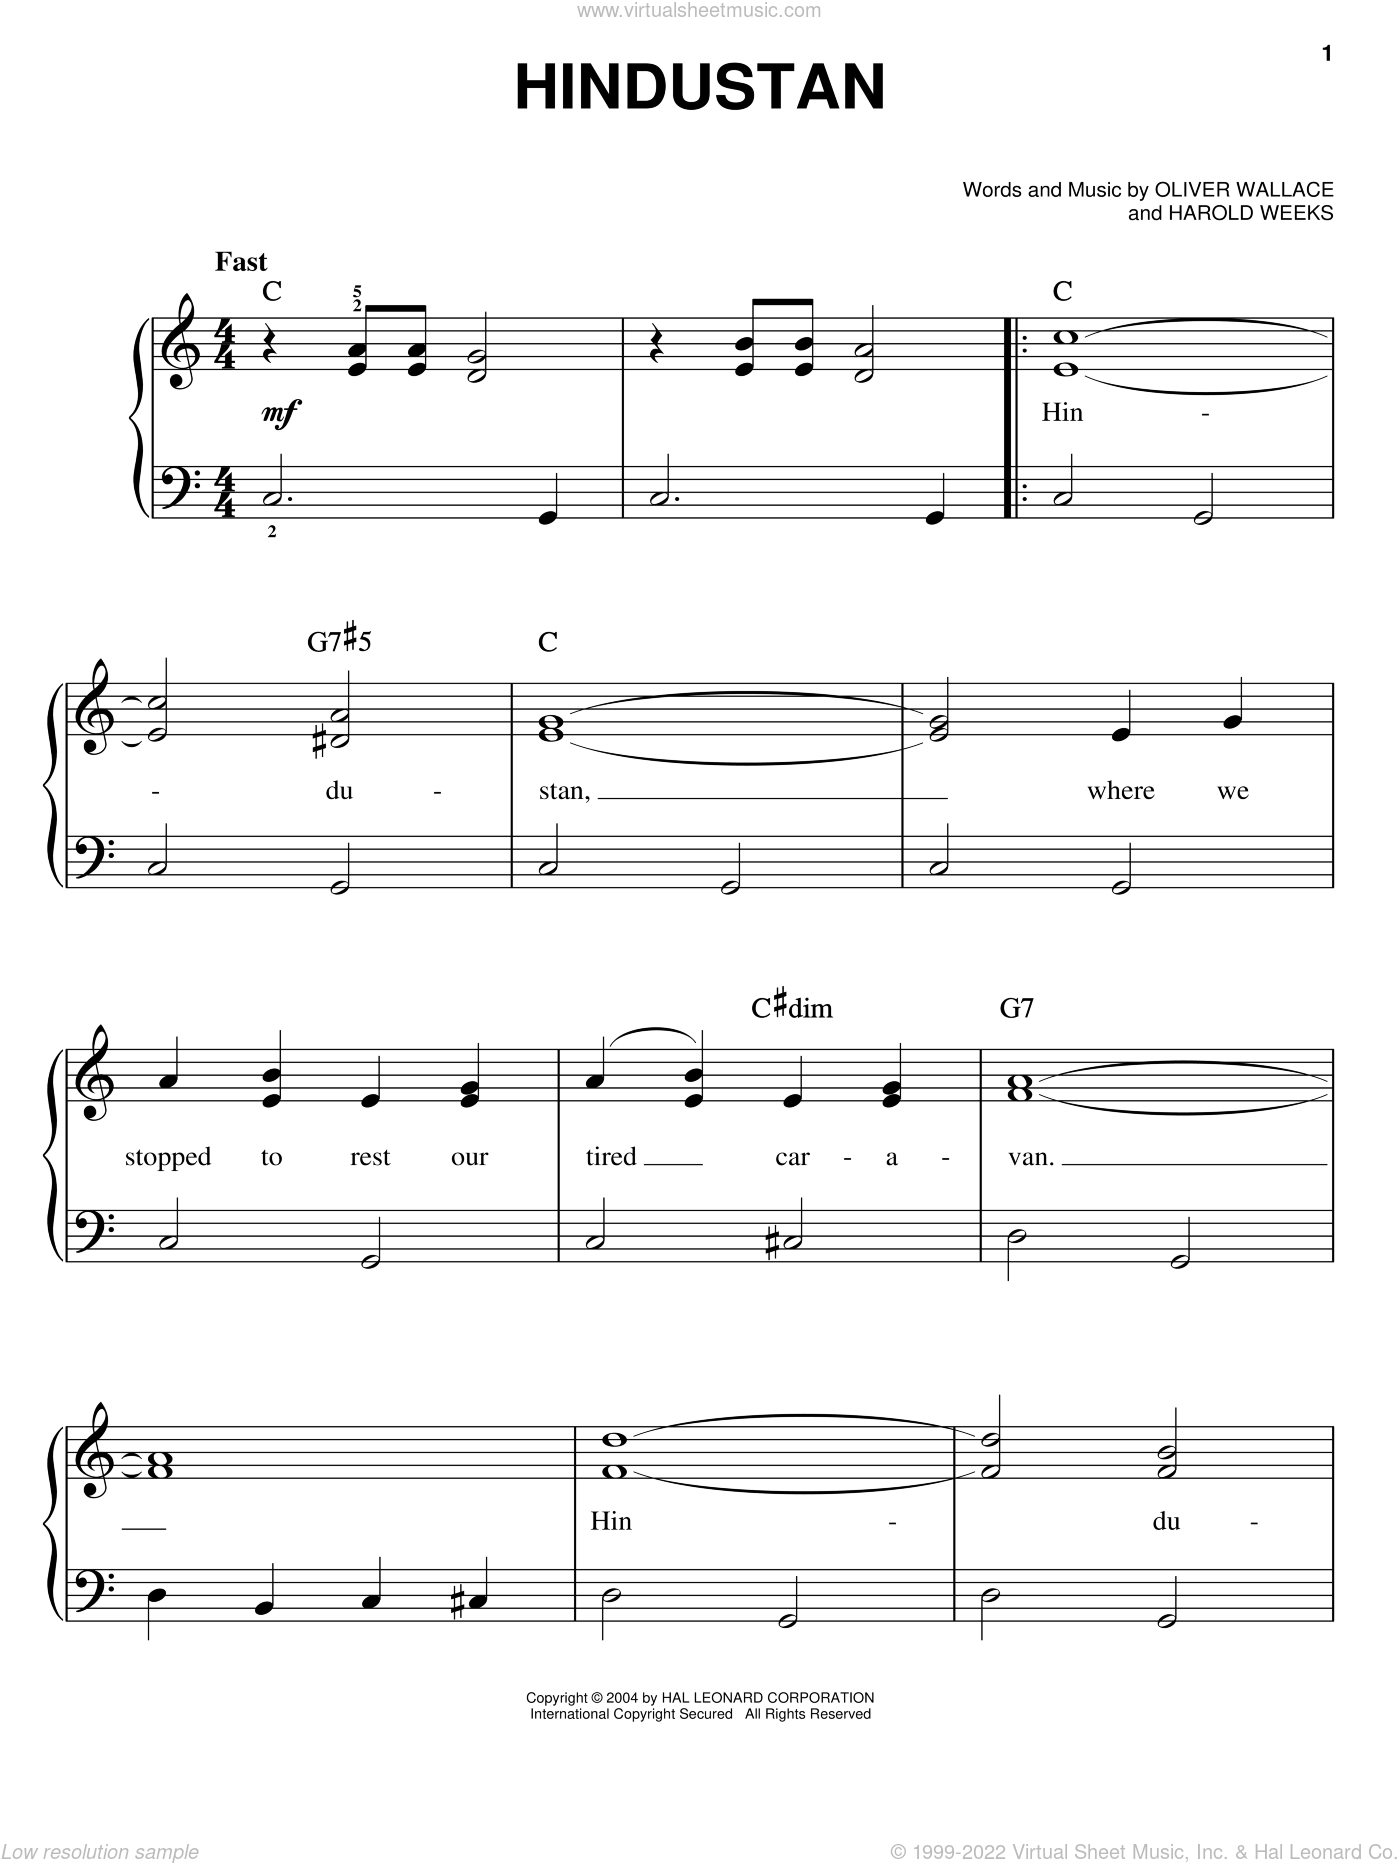 Free Calcutta sheet music  Download PDF or print on